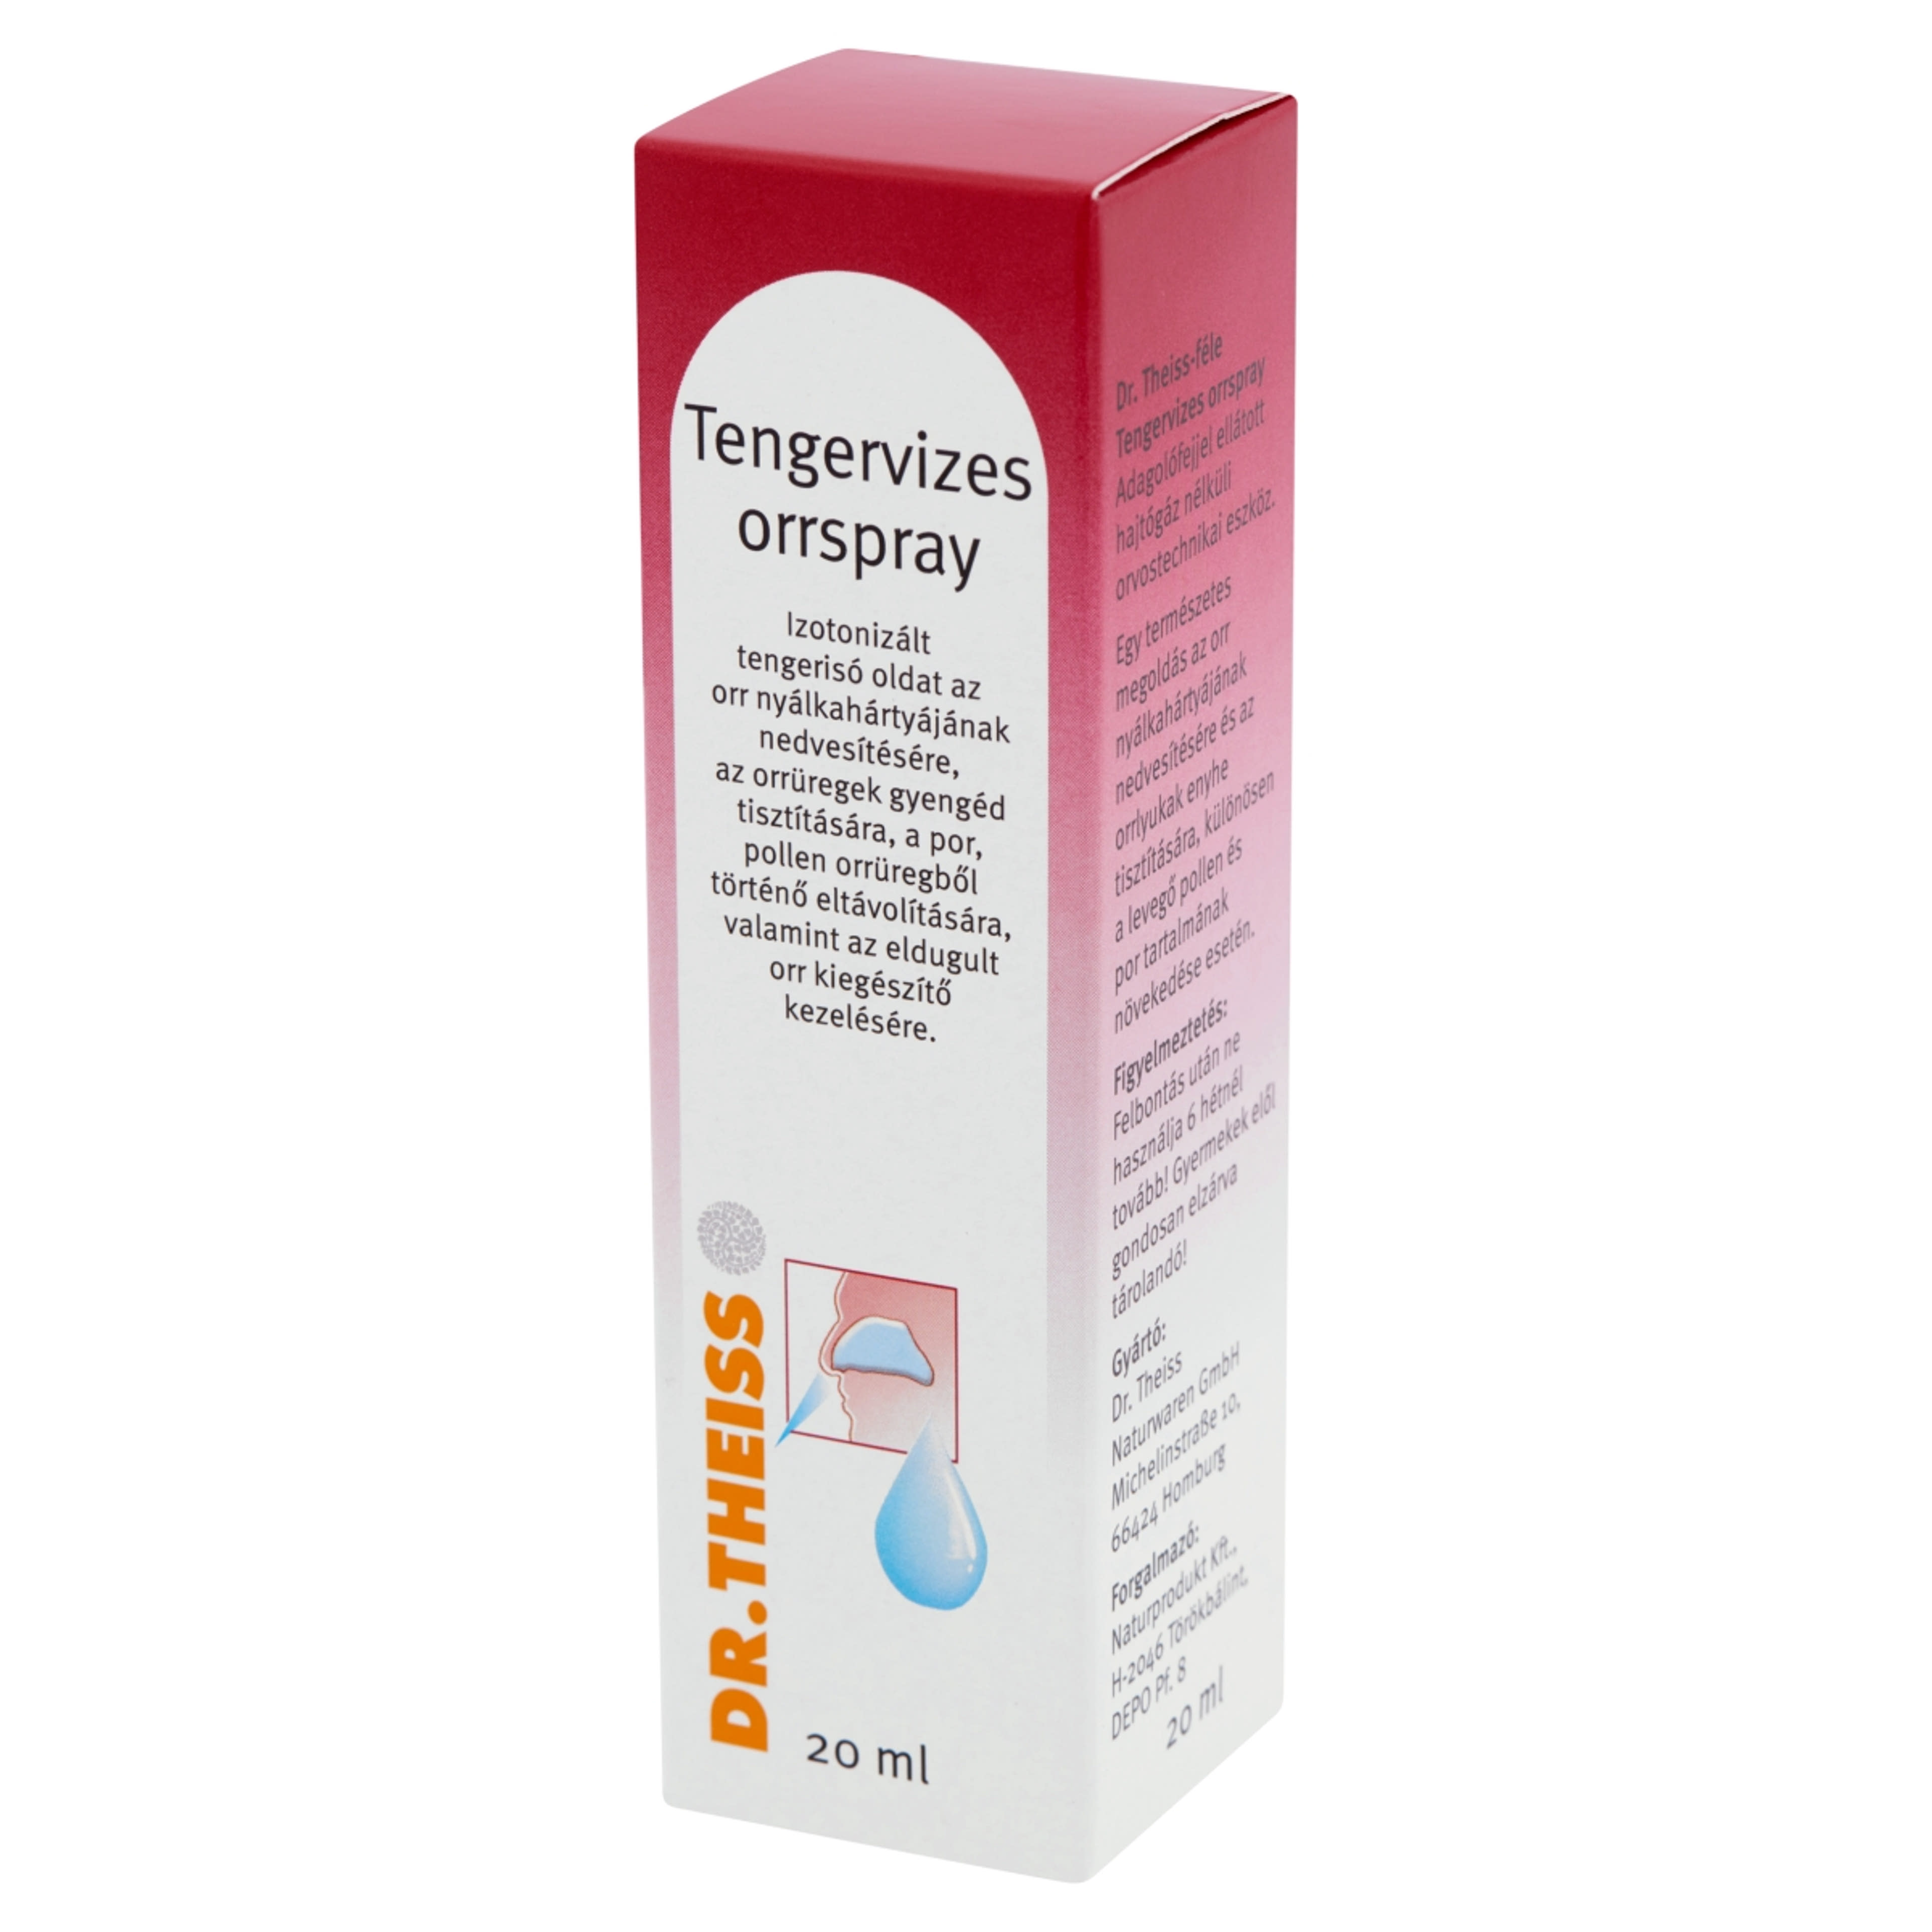 Dr.Theiss Tengervizes Orrspray - 20 ml-3